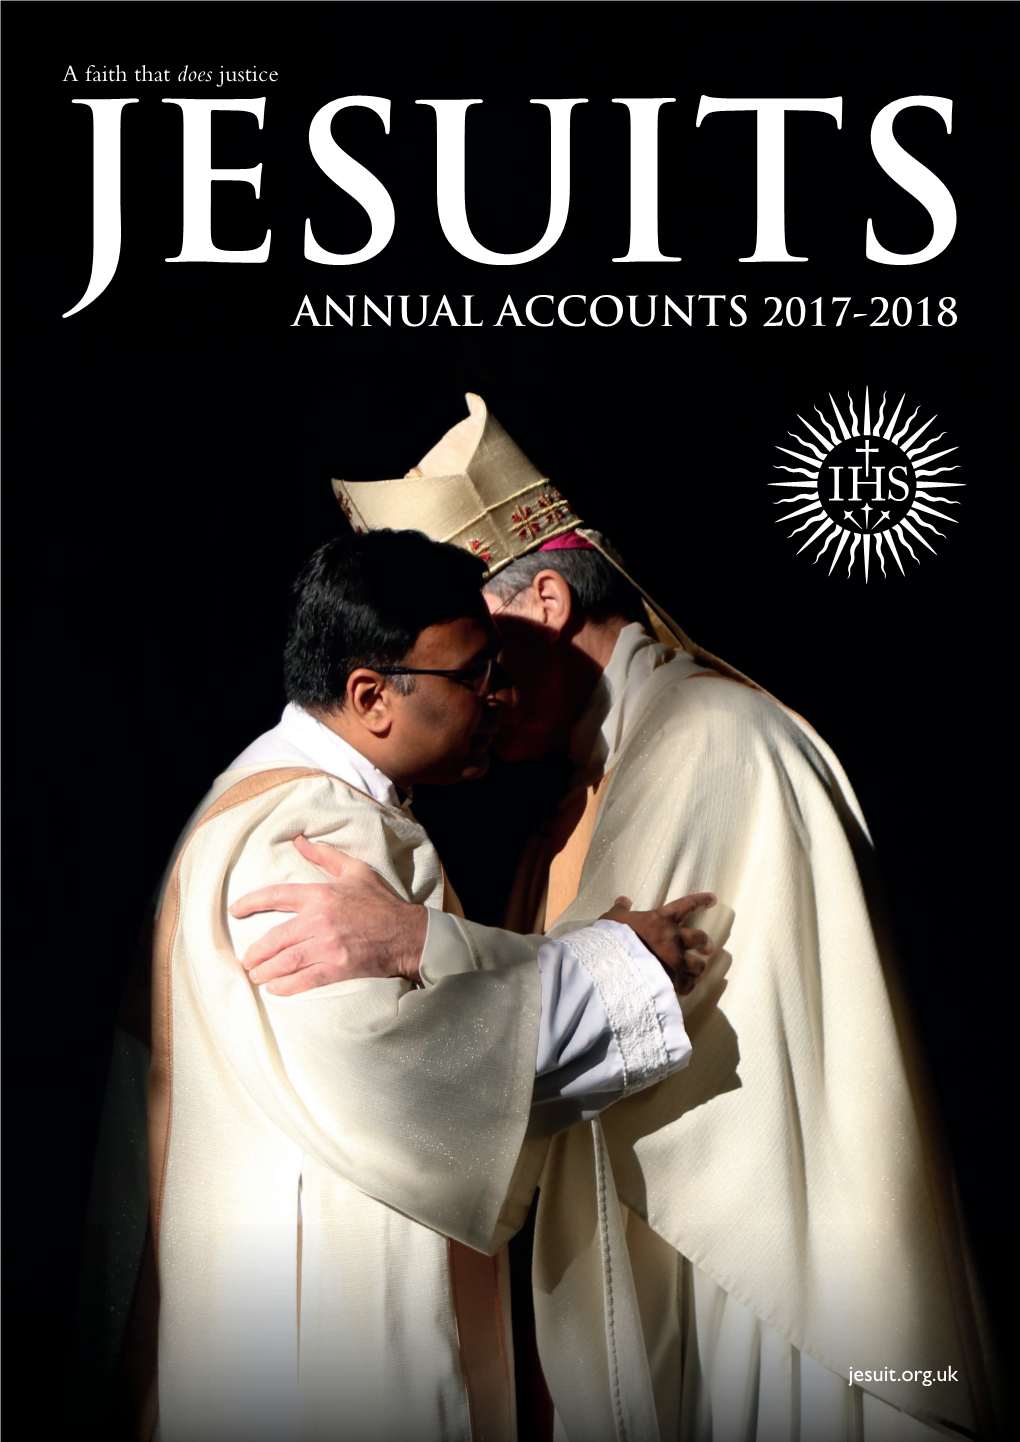 Annual Accounts 2017-2018